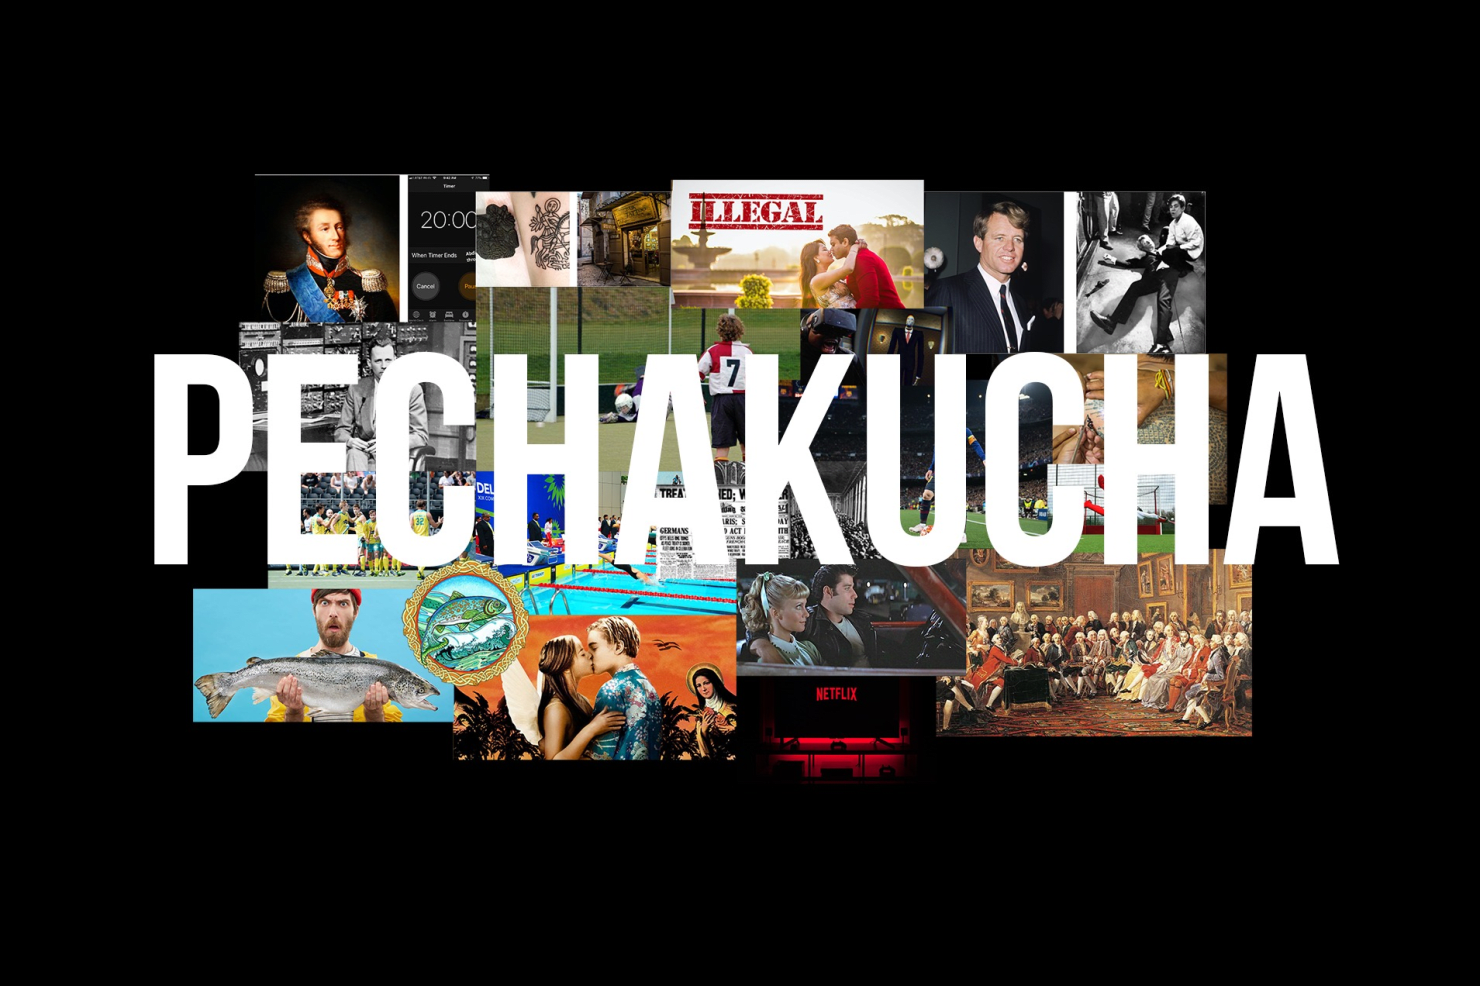 PechaKucha Presentation: Music, Leeds, Come Play With Me